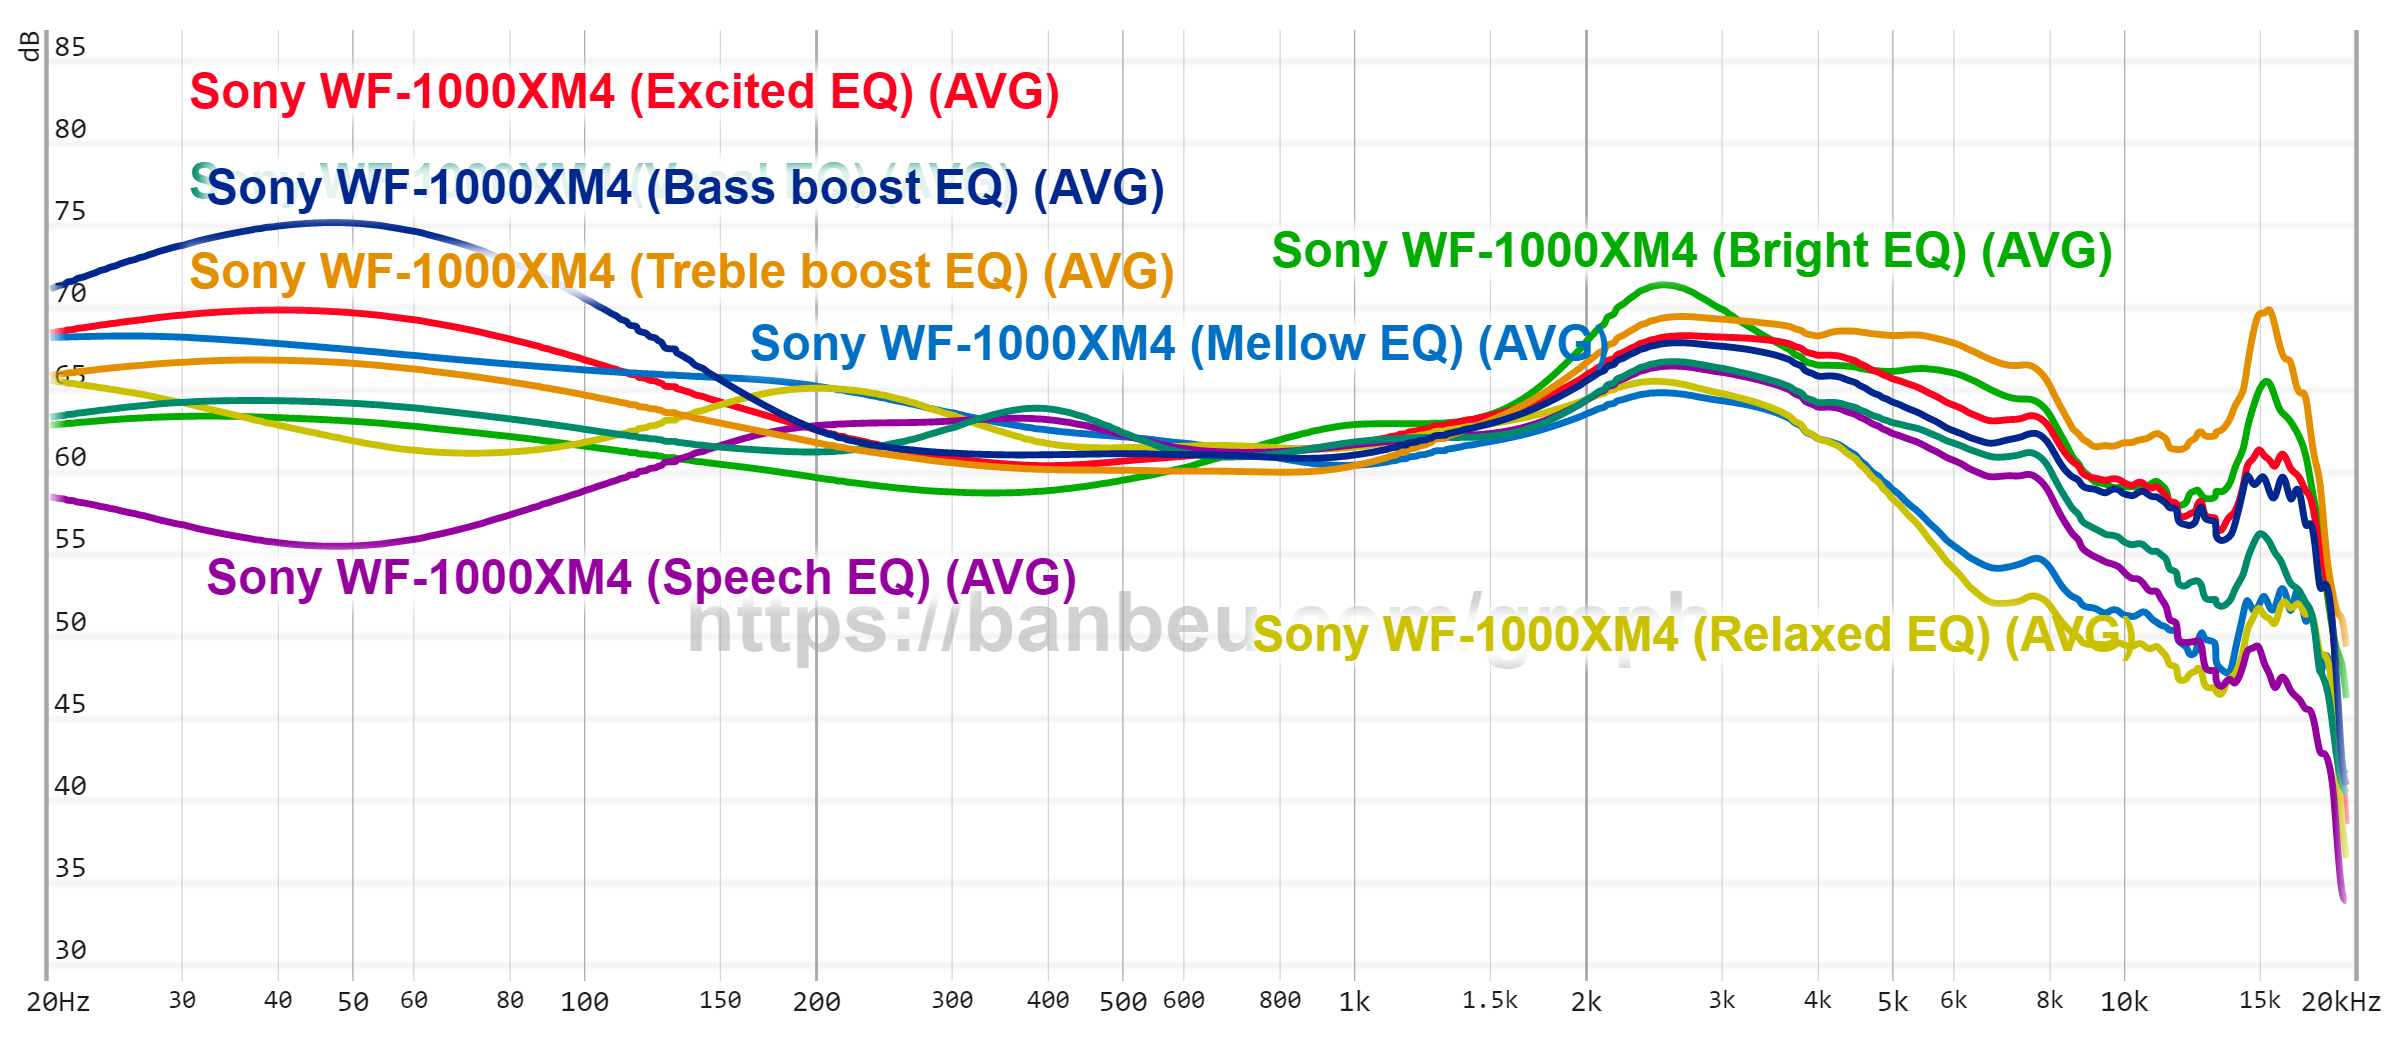 Sony WF-1000XM4 quick review: The XM4 curses